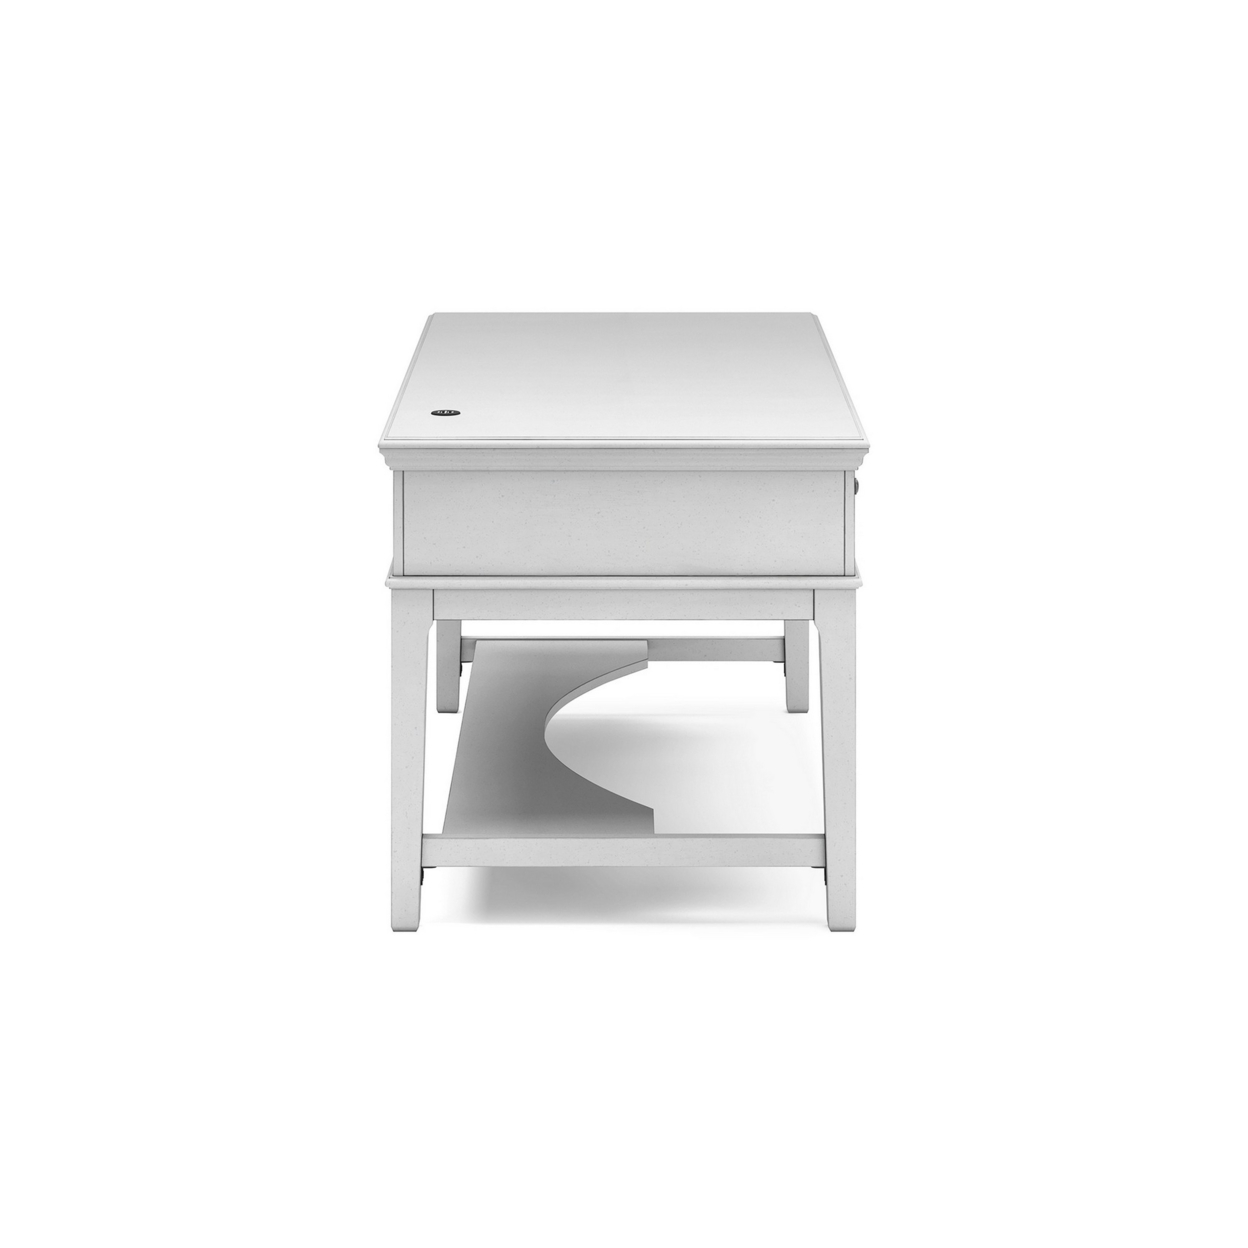 60 Inch Home Office Storage Desk, Crisp Whitewashed Wood, Dual USB Ports - Saltoro Sherpi